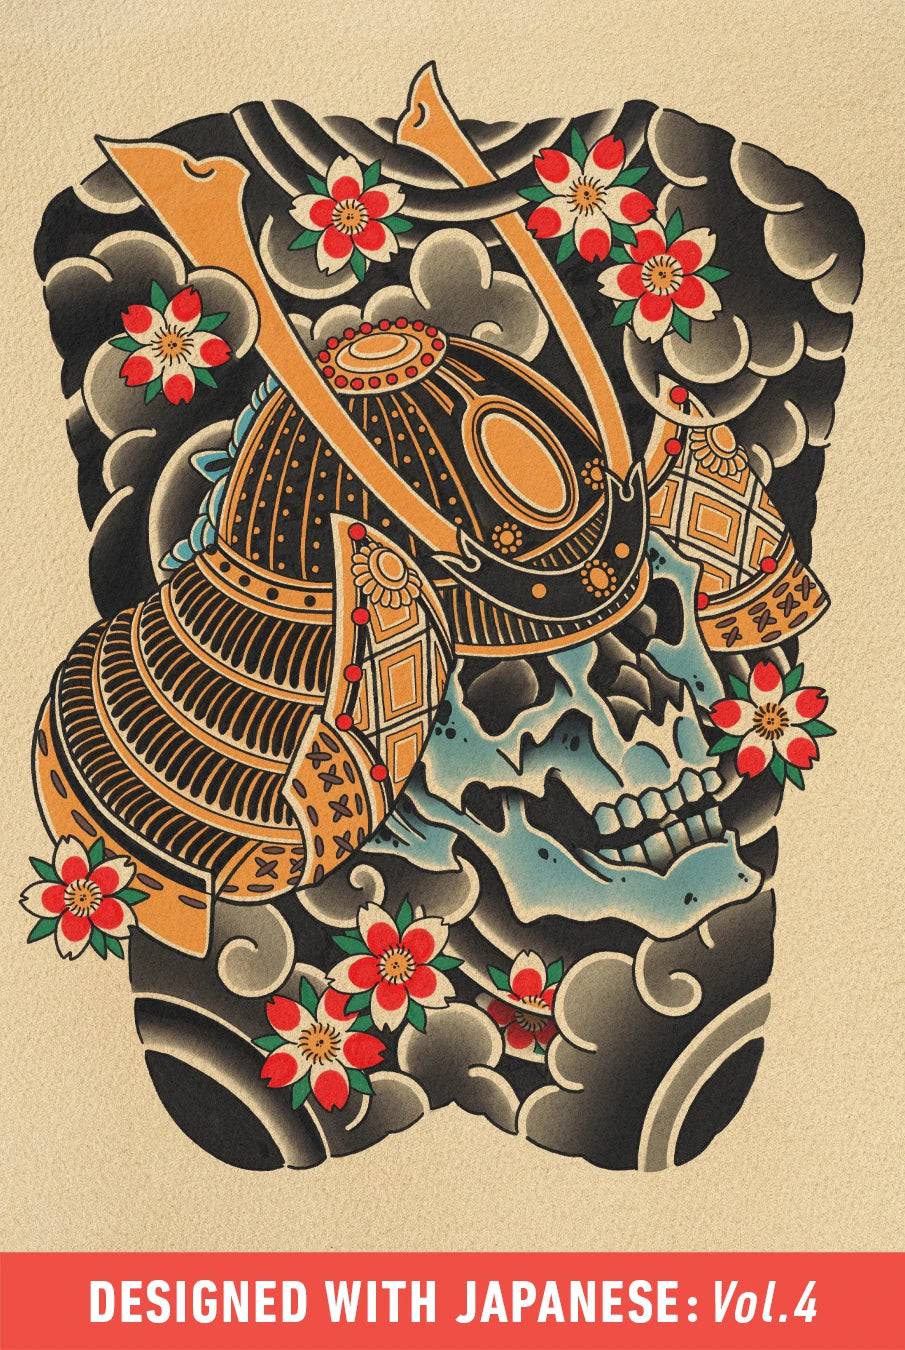 samurai tattoo stencil